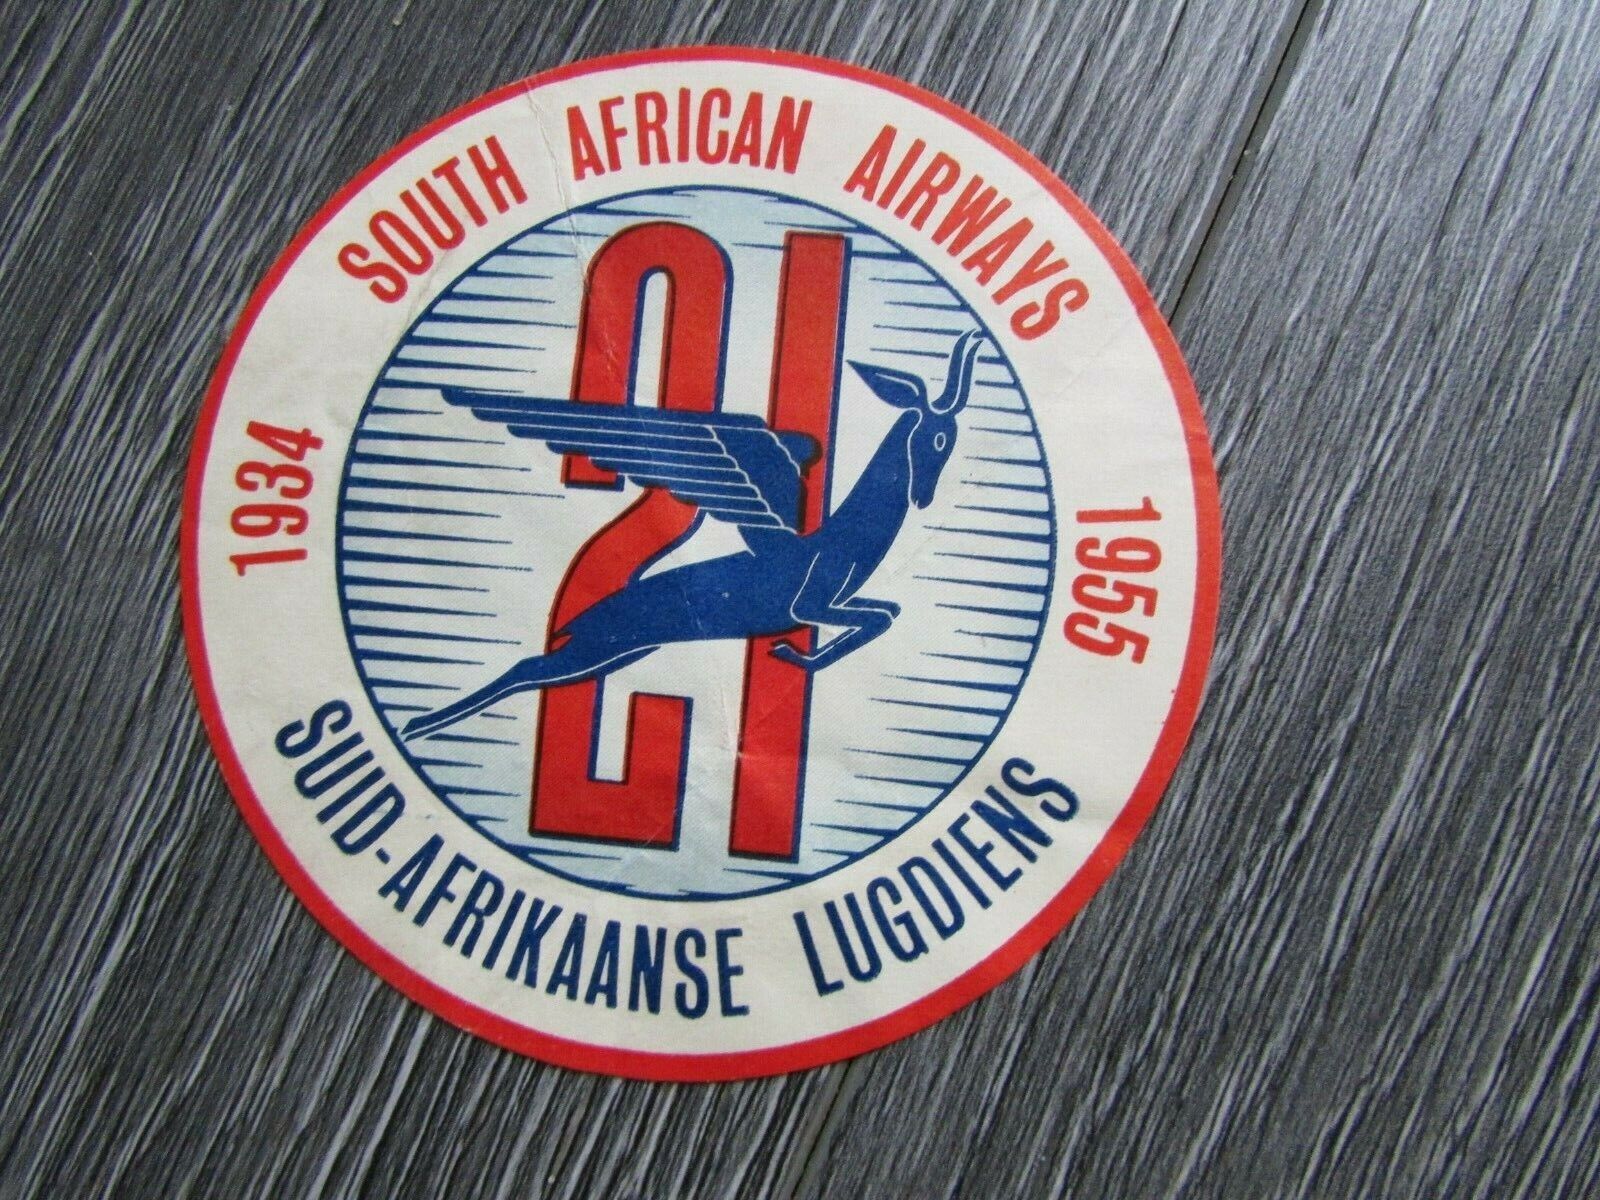 South African Airways 1955 Suid-Afrikaanse Lugdiens Airline Luggage Label